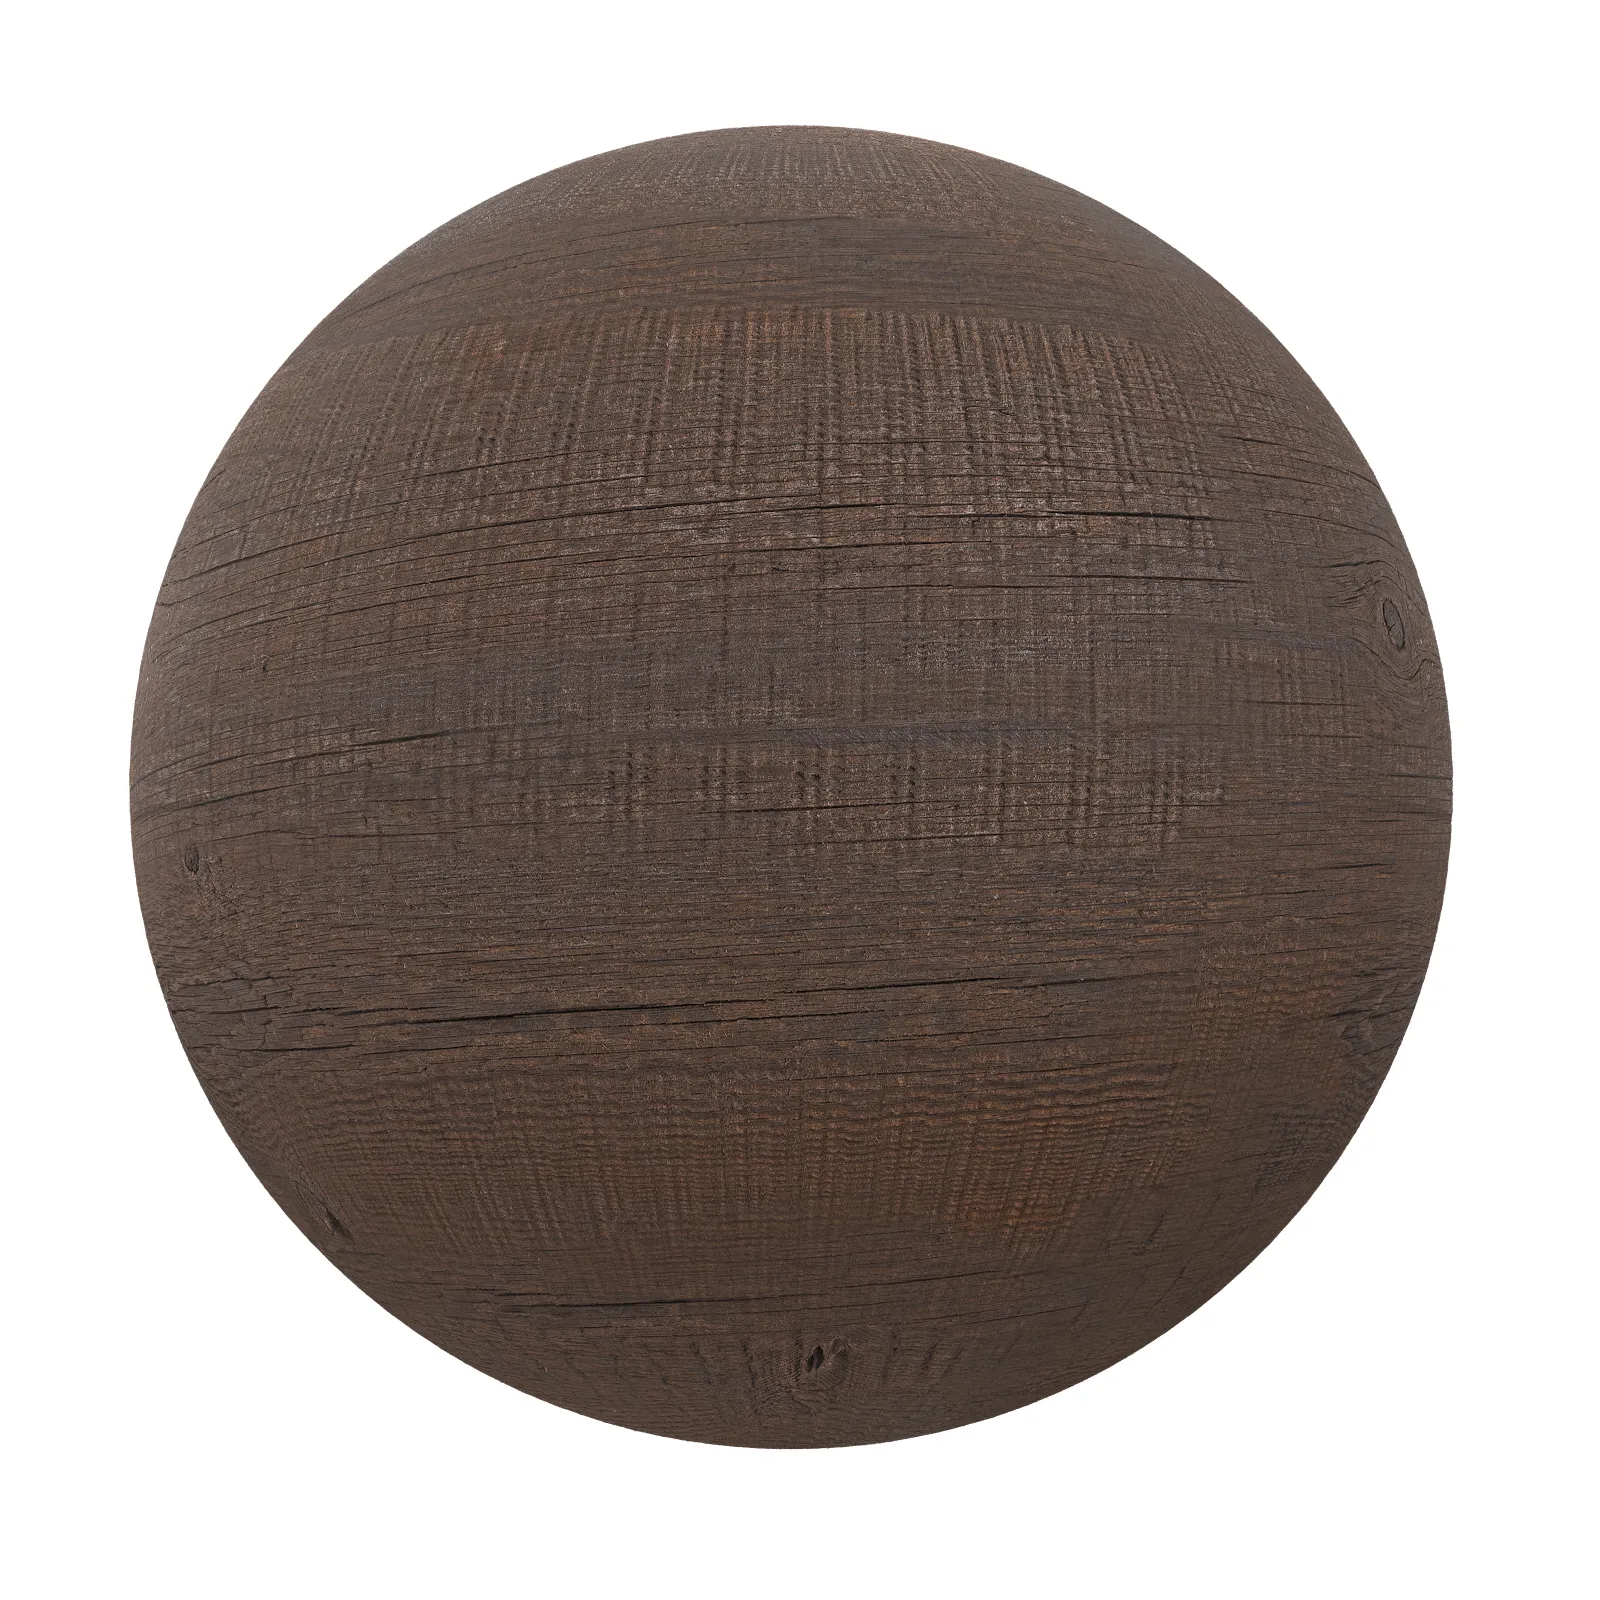 3ds Max Files – Texture – 8 – Wood Texture – 81 – Wood Texture by Minh Nguyen